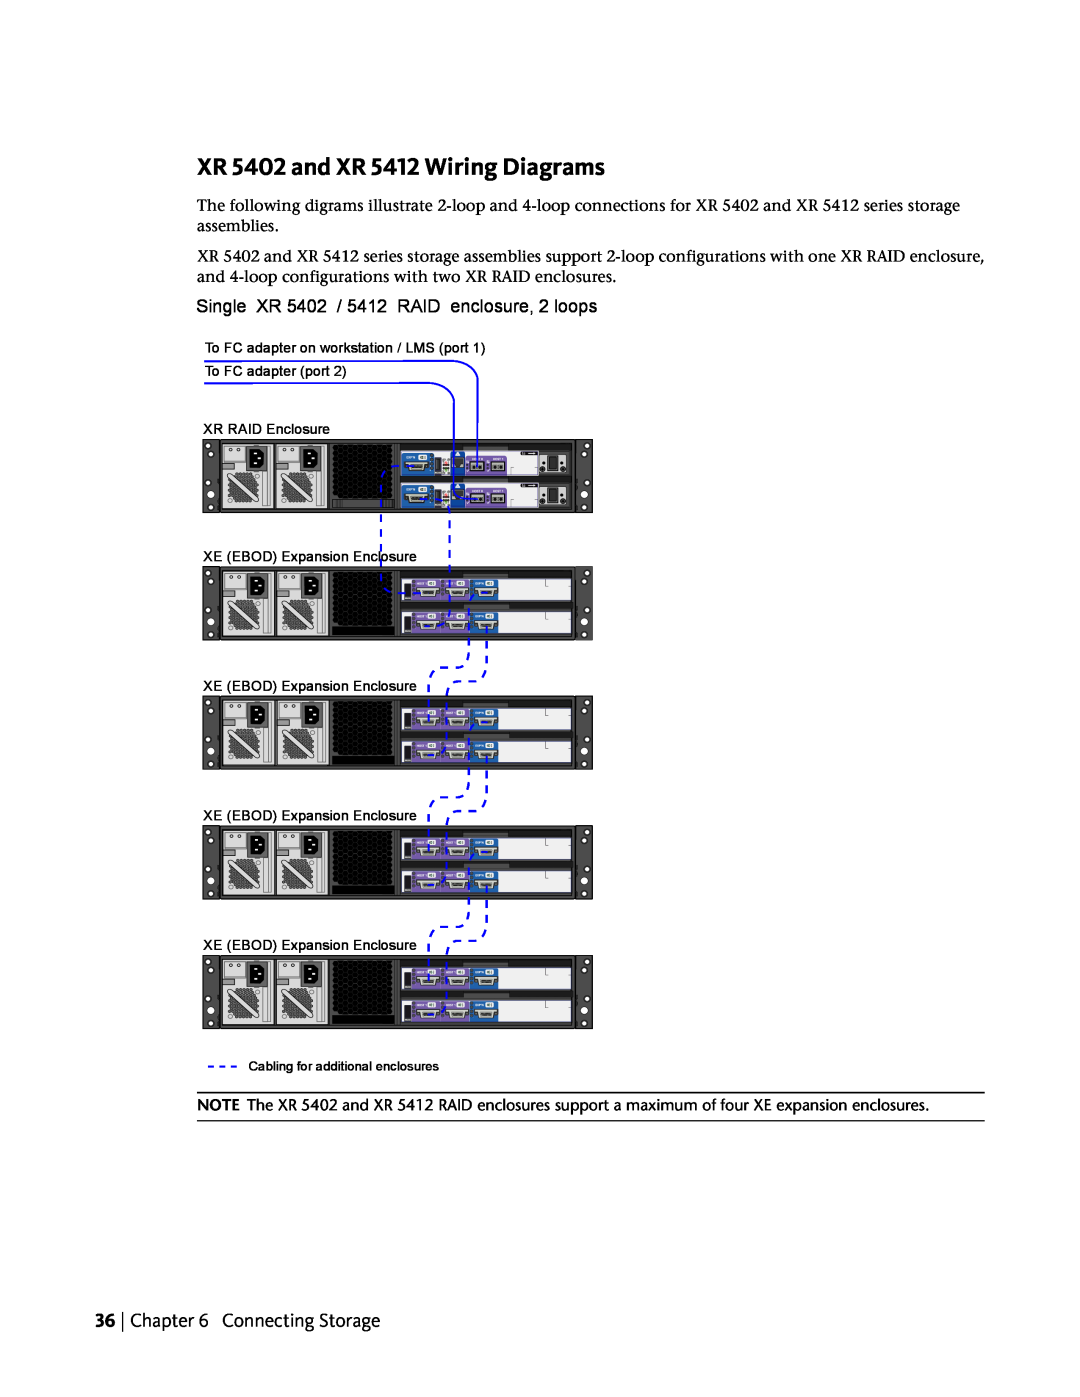 HP Z800 manual XR 5402 and XR 5412 Wiring Diagrams, Connecting Storage, Single XR 5402 / 5412 RAID enclosure, 2 loops 